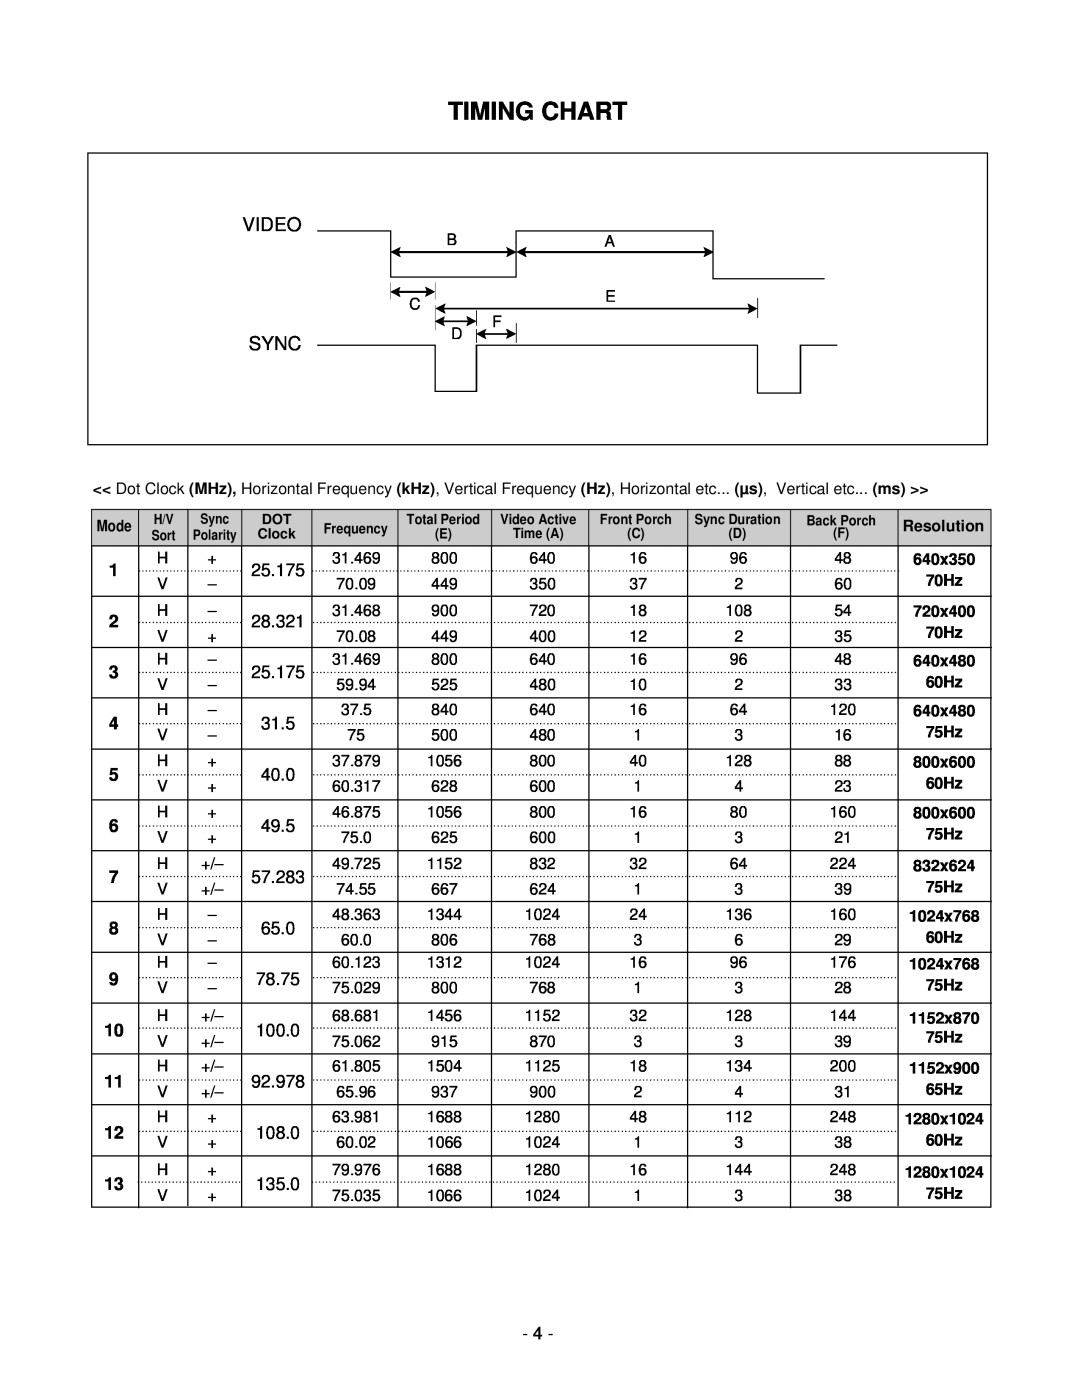 LG Electronics LCD 782LS service manual Timing Chart, Video Sync 